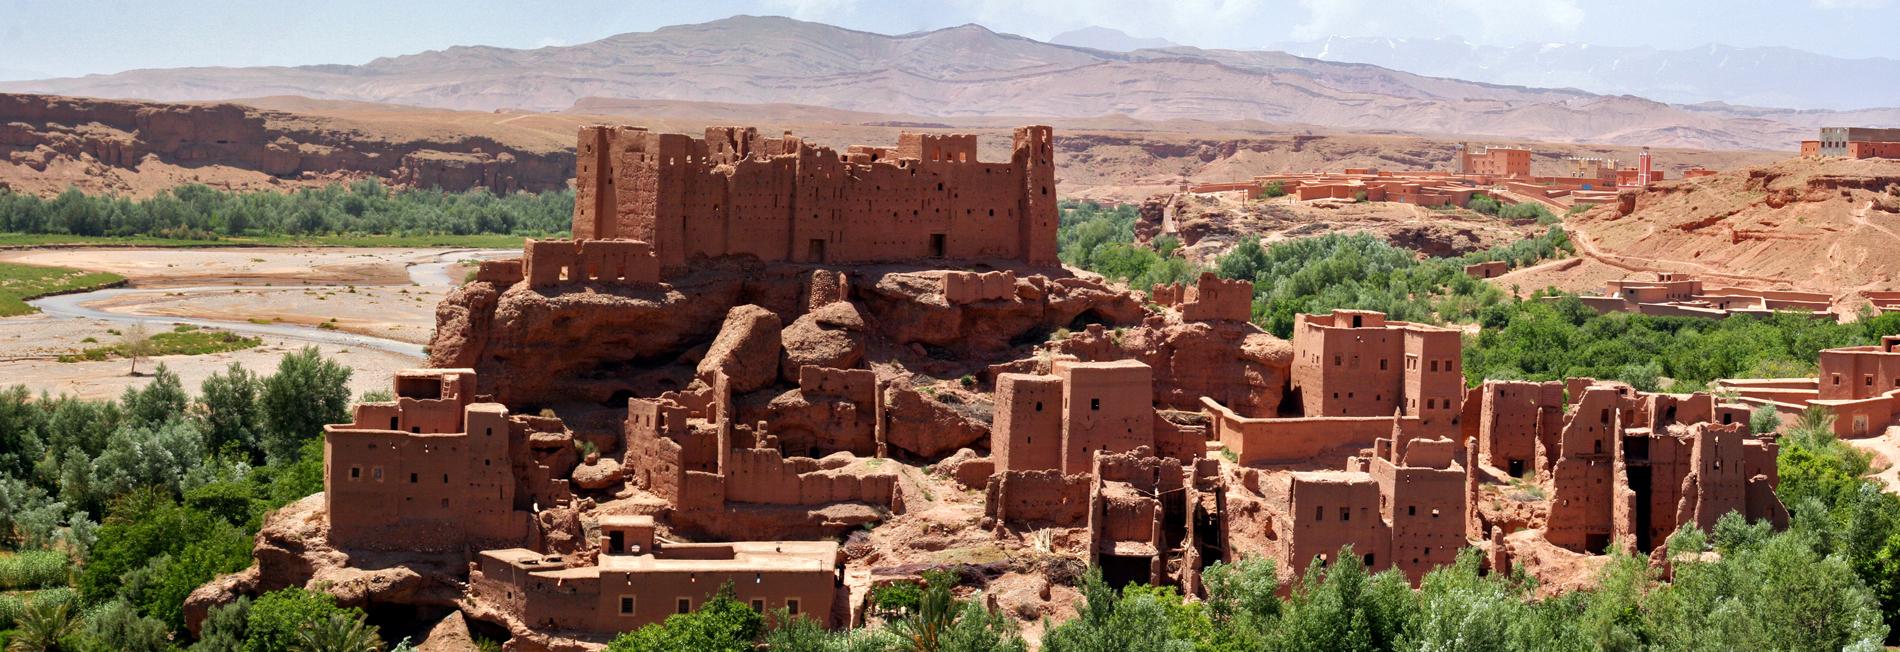 Maroc citadelle